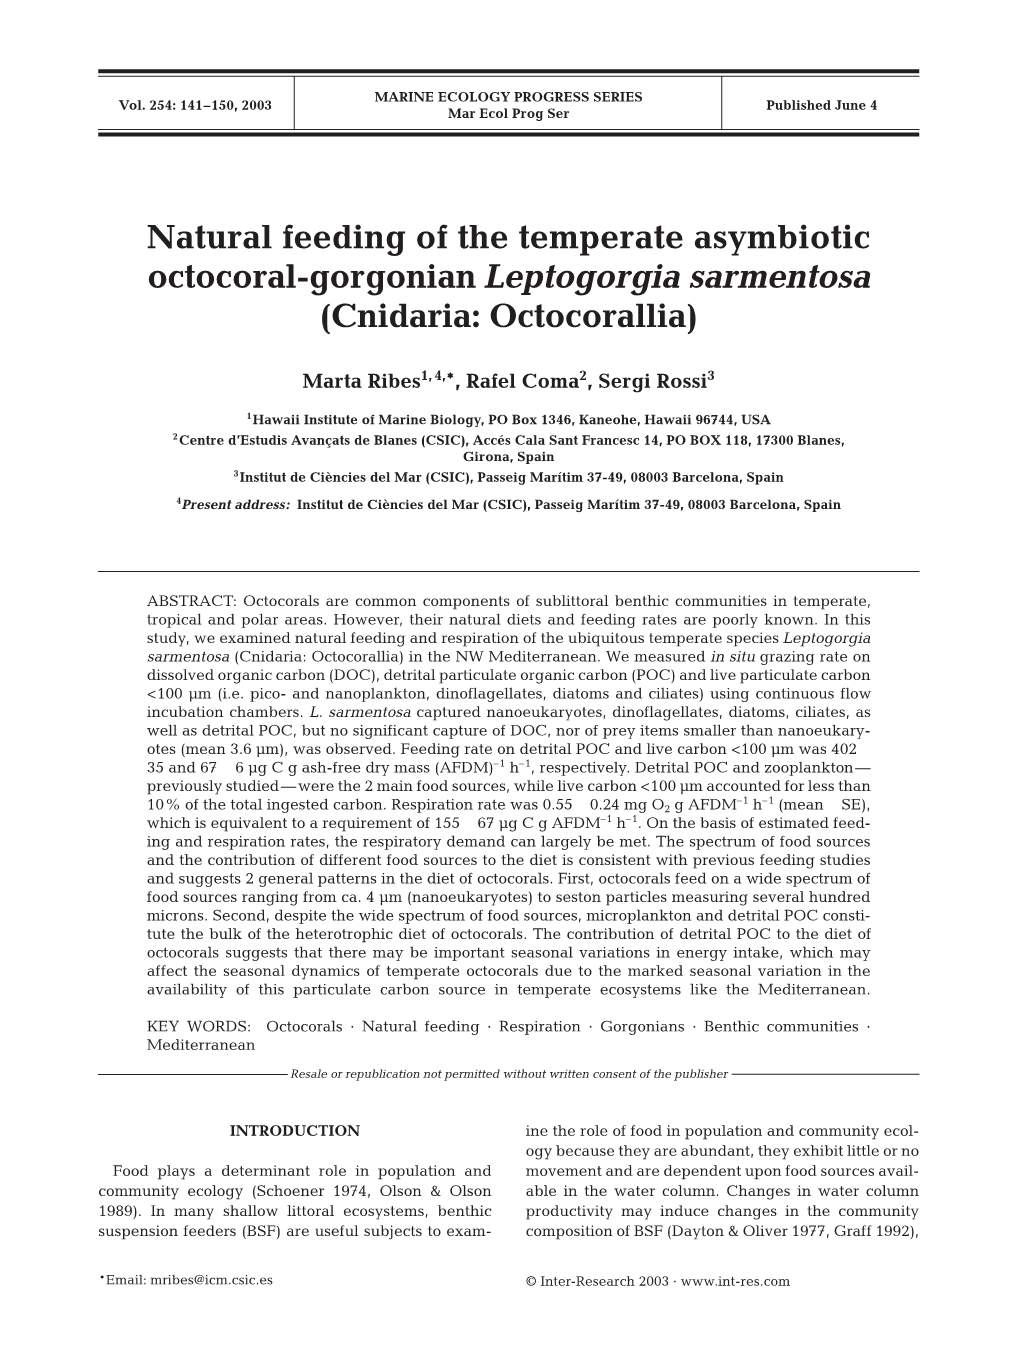 Natural Feeding of the Temperate Asymbiotic Octocoral-Gorgonian Leptogorgia Sarmentosa (Cnidaria: Octocorallia)